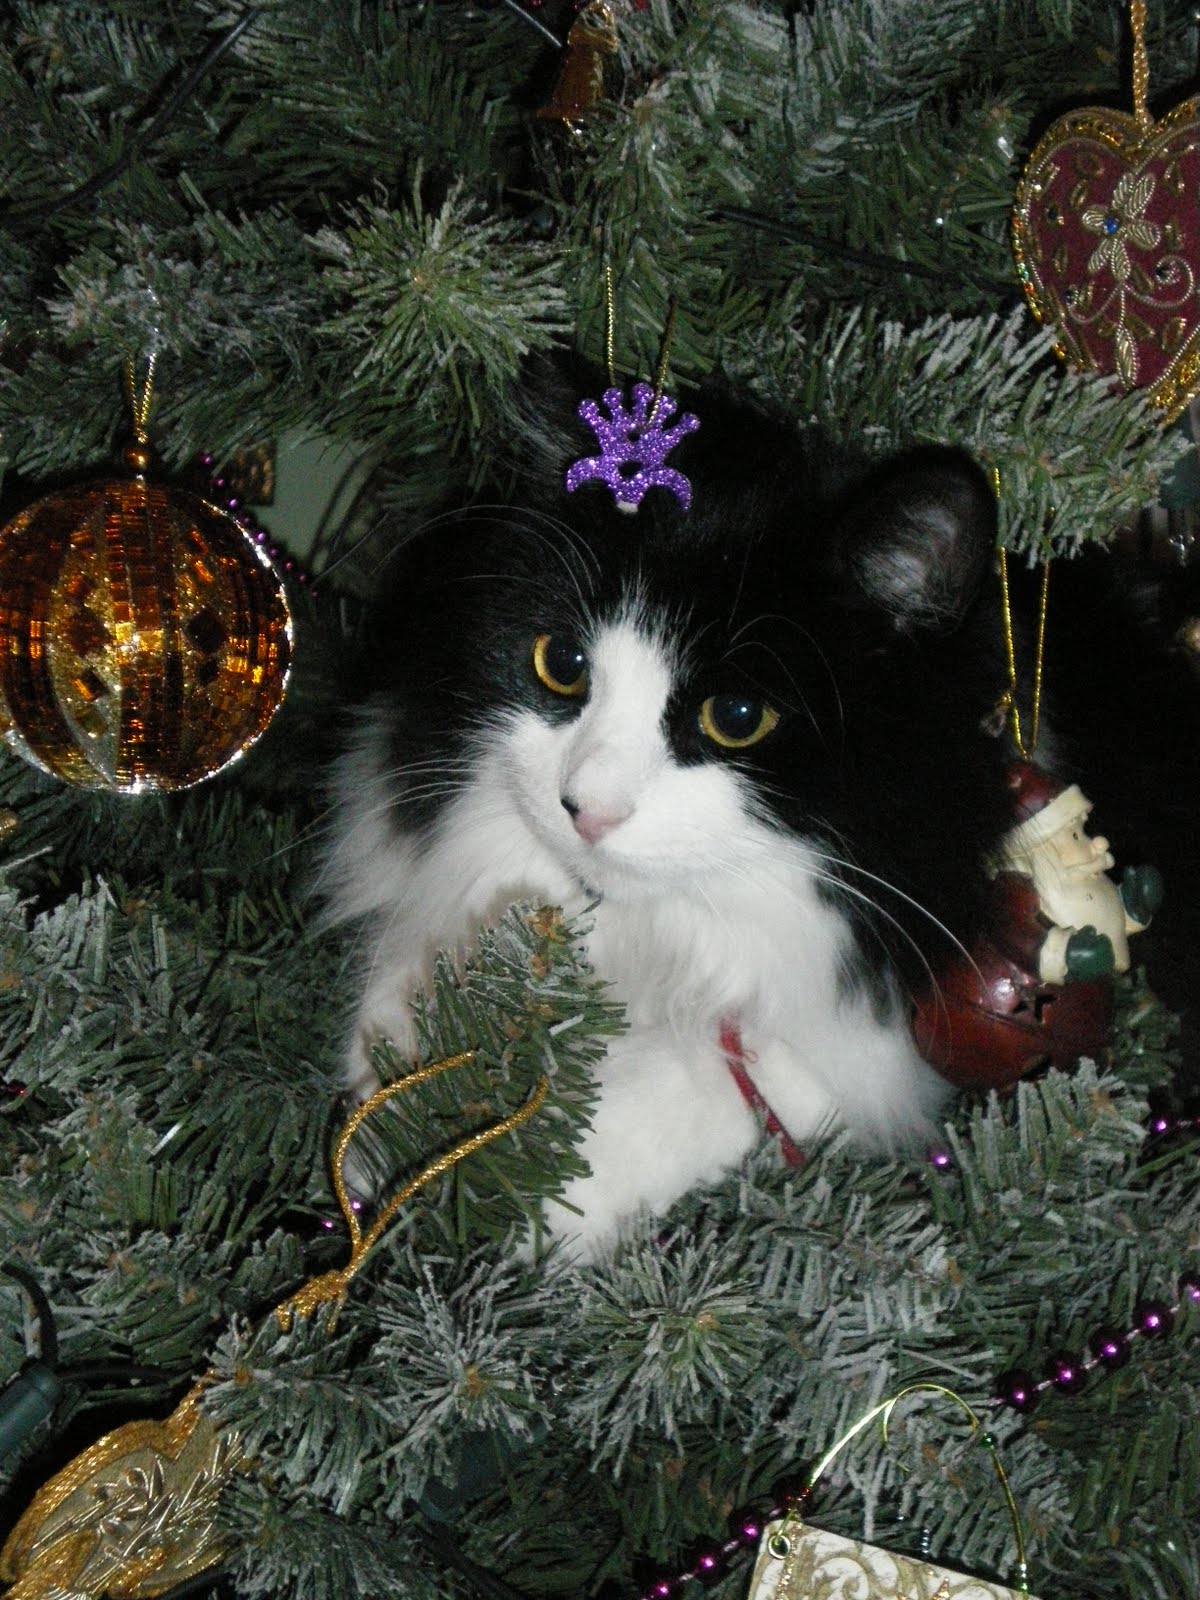 kitty likes to sleep under the Christmas tree Imgur